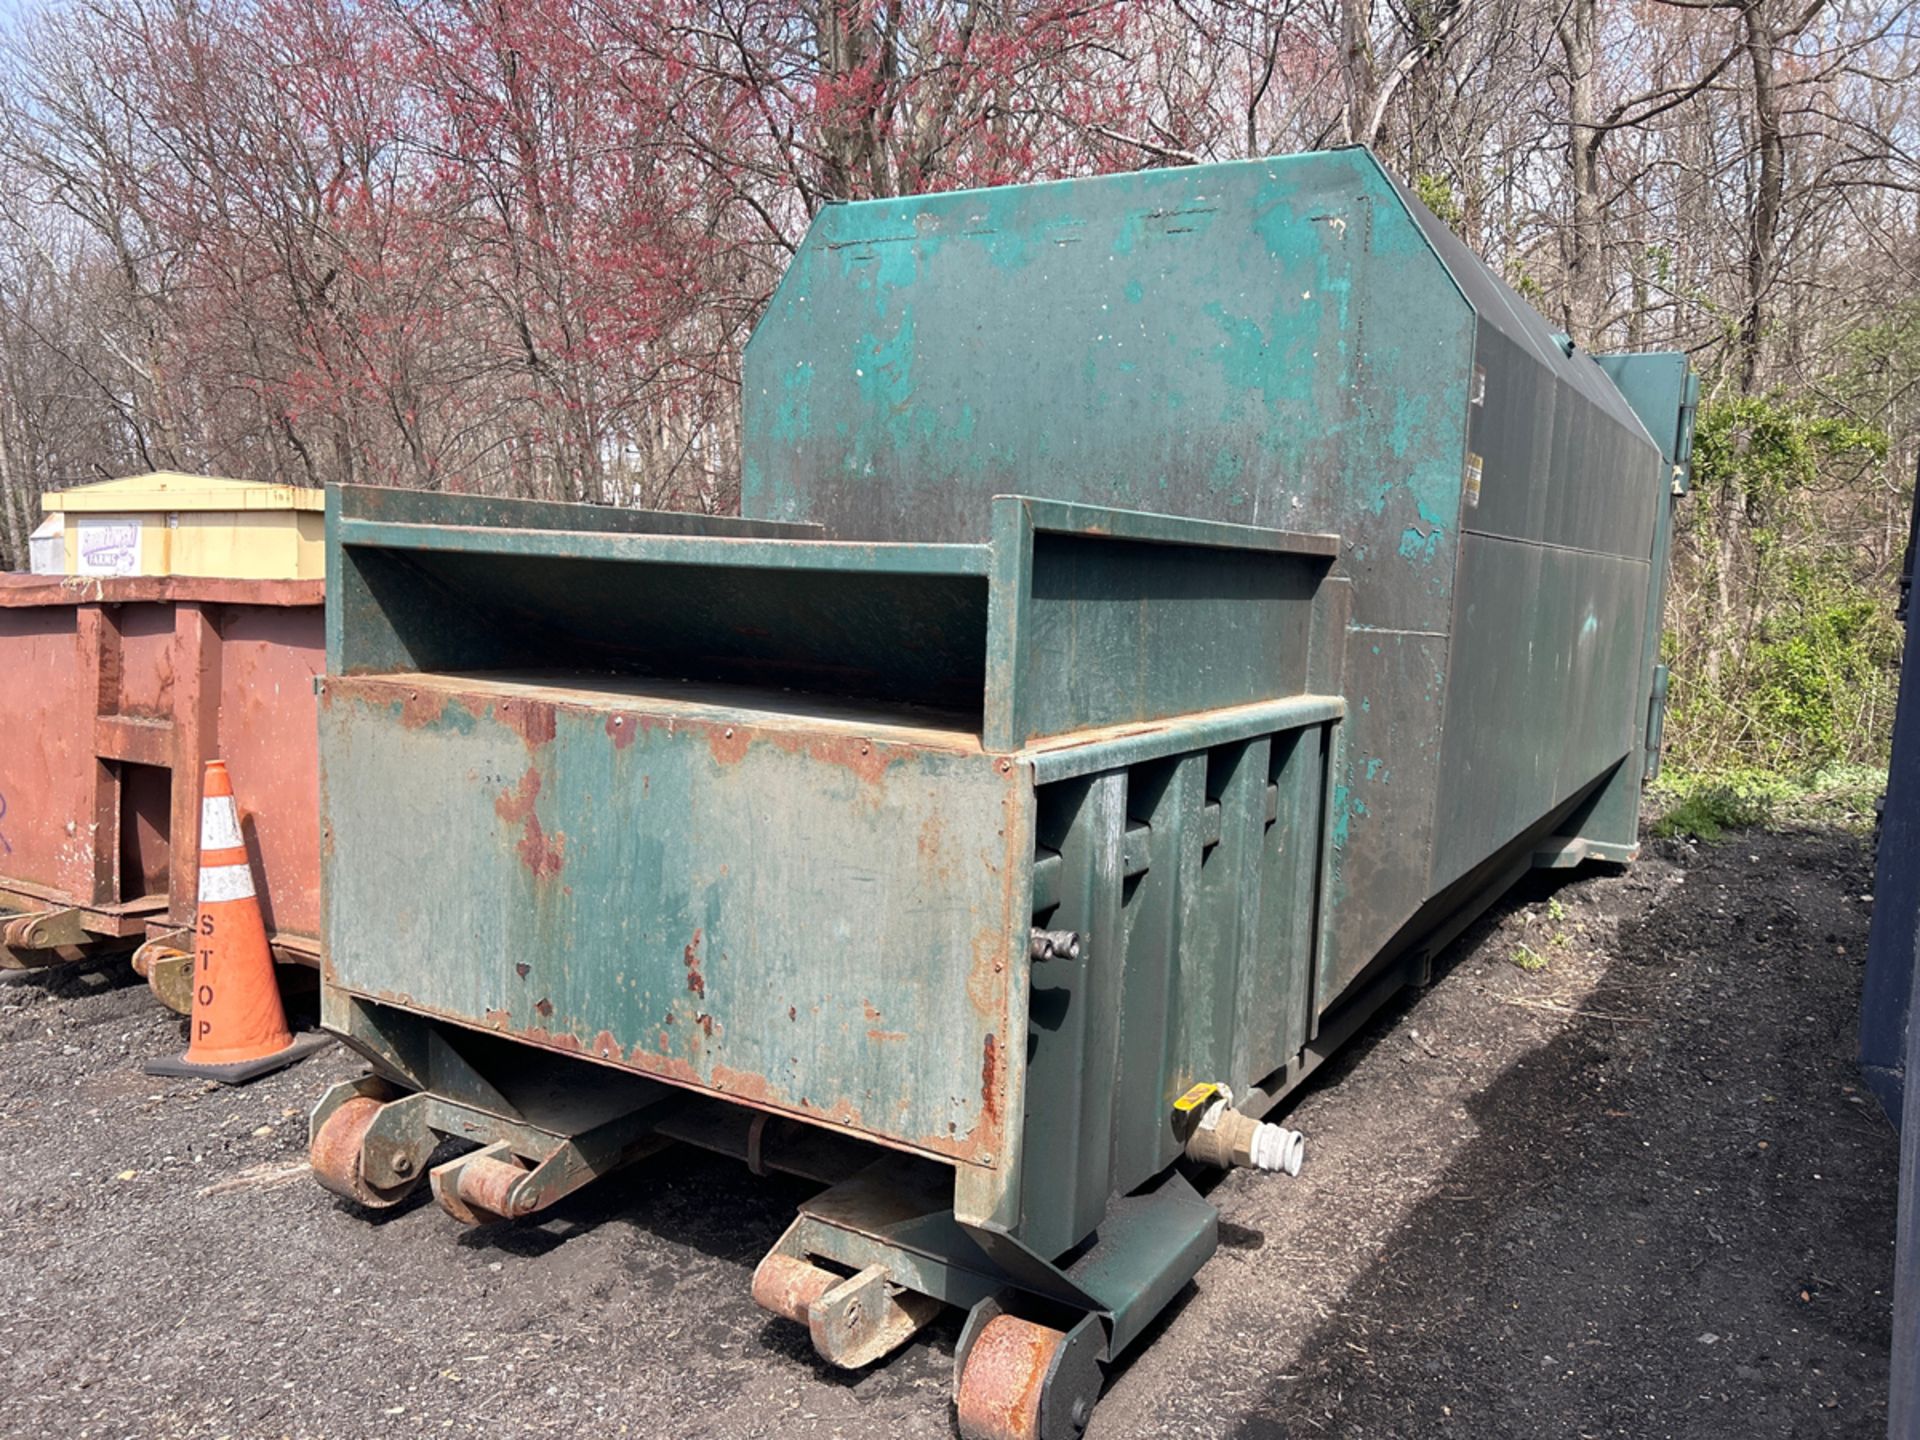 Wastequip Galbreath Commercial Trash Compactor (Monroe, NJ location) - Image 3 of 10